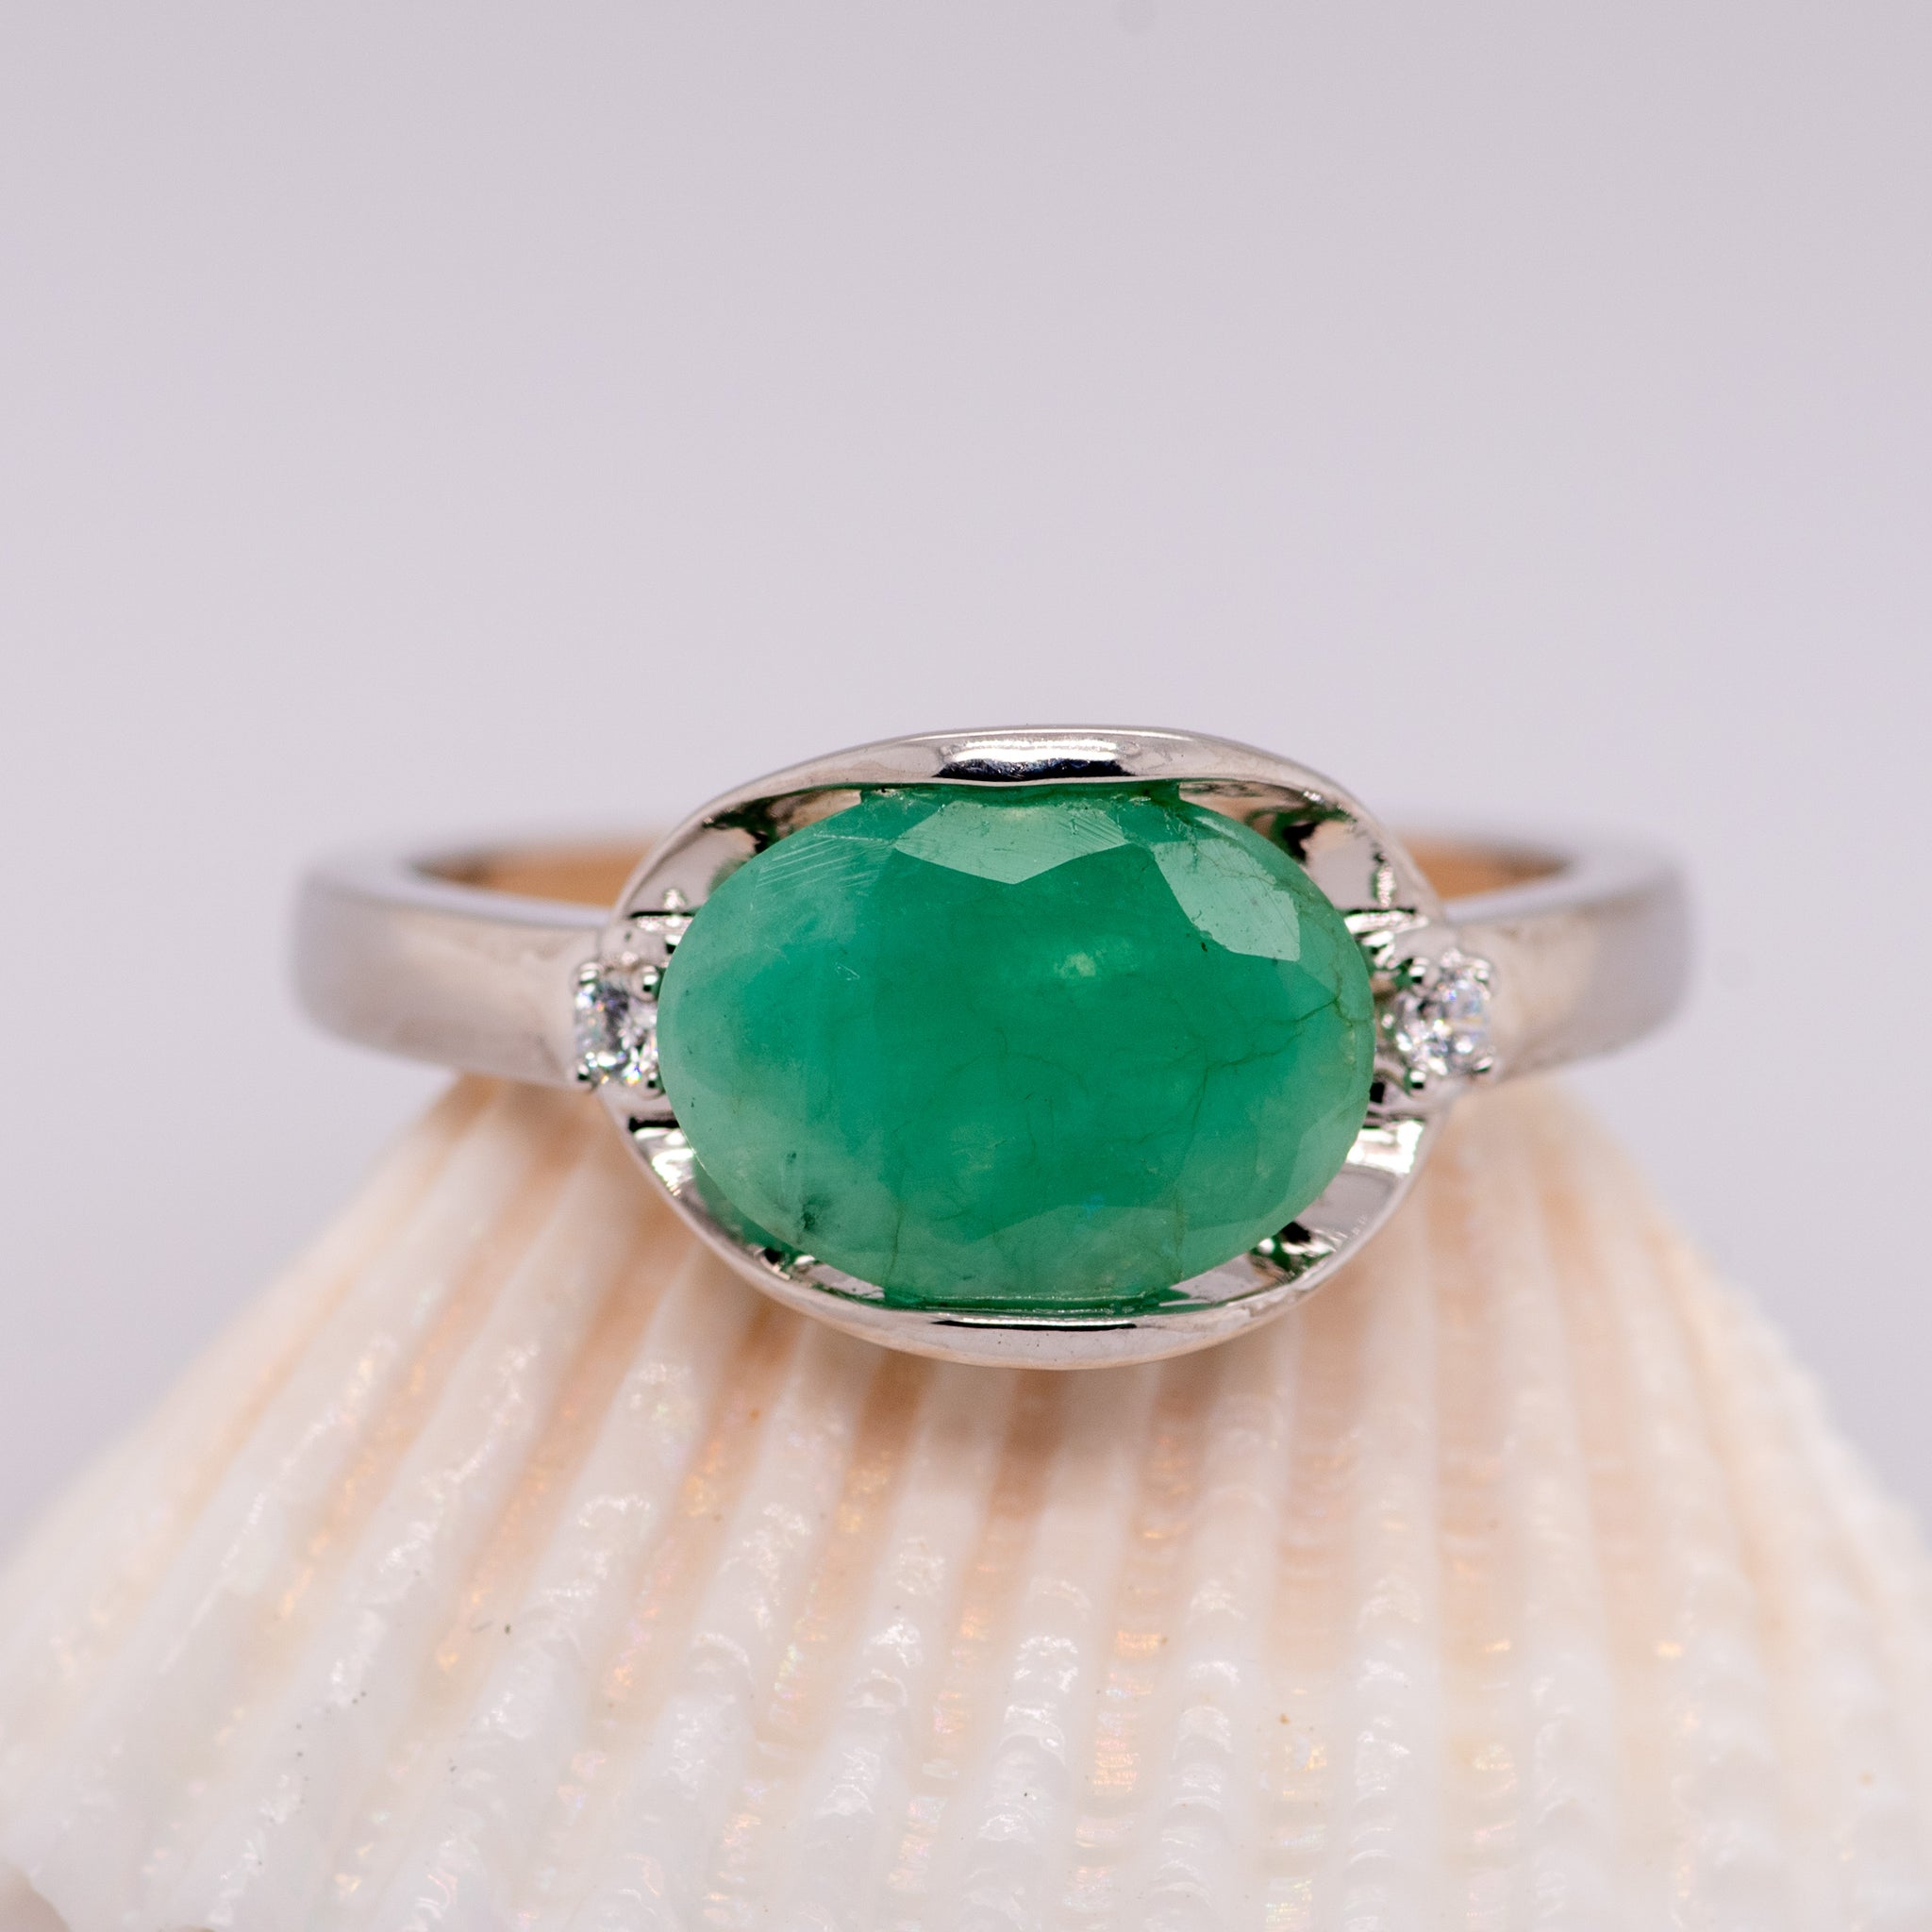 Okelani Emerald Ring in Sterling Silver - Heron and Swan